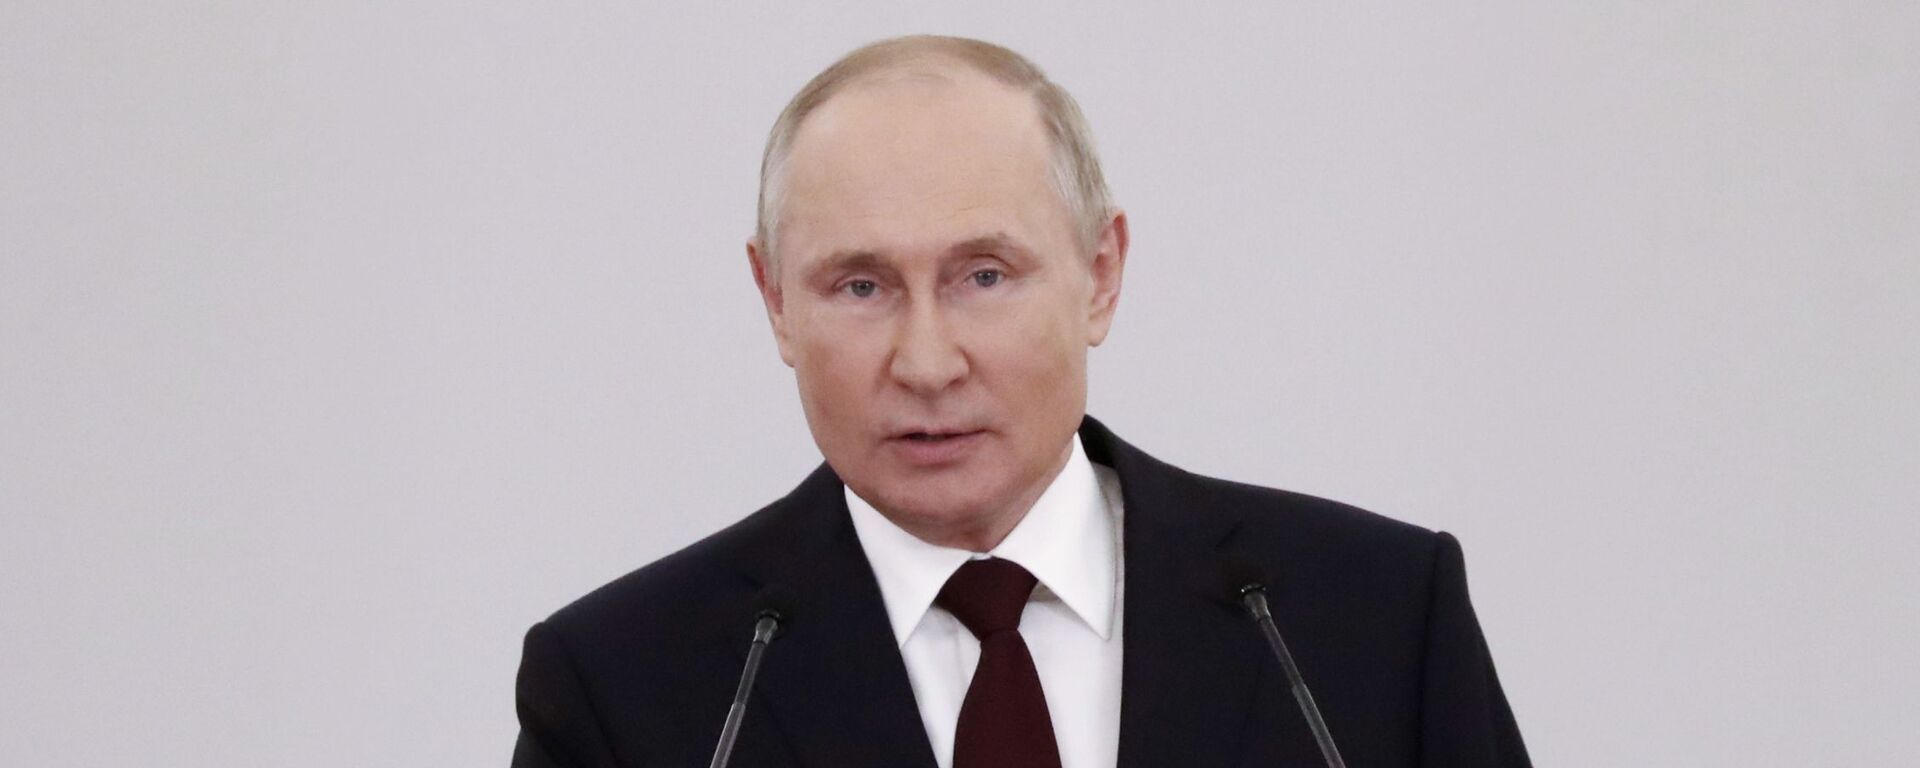 Predsednik Rusije Vladimir Putin - Sputnik Srbija, 1920, 28.06.2021